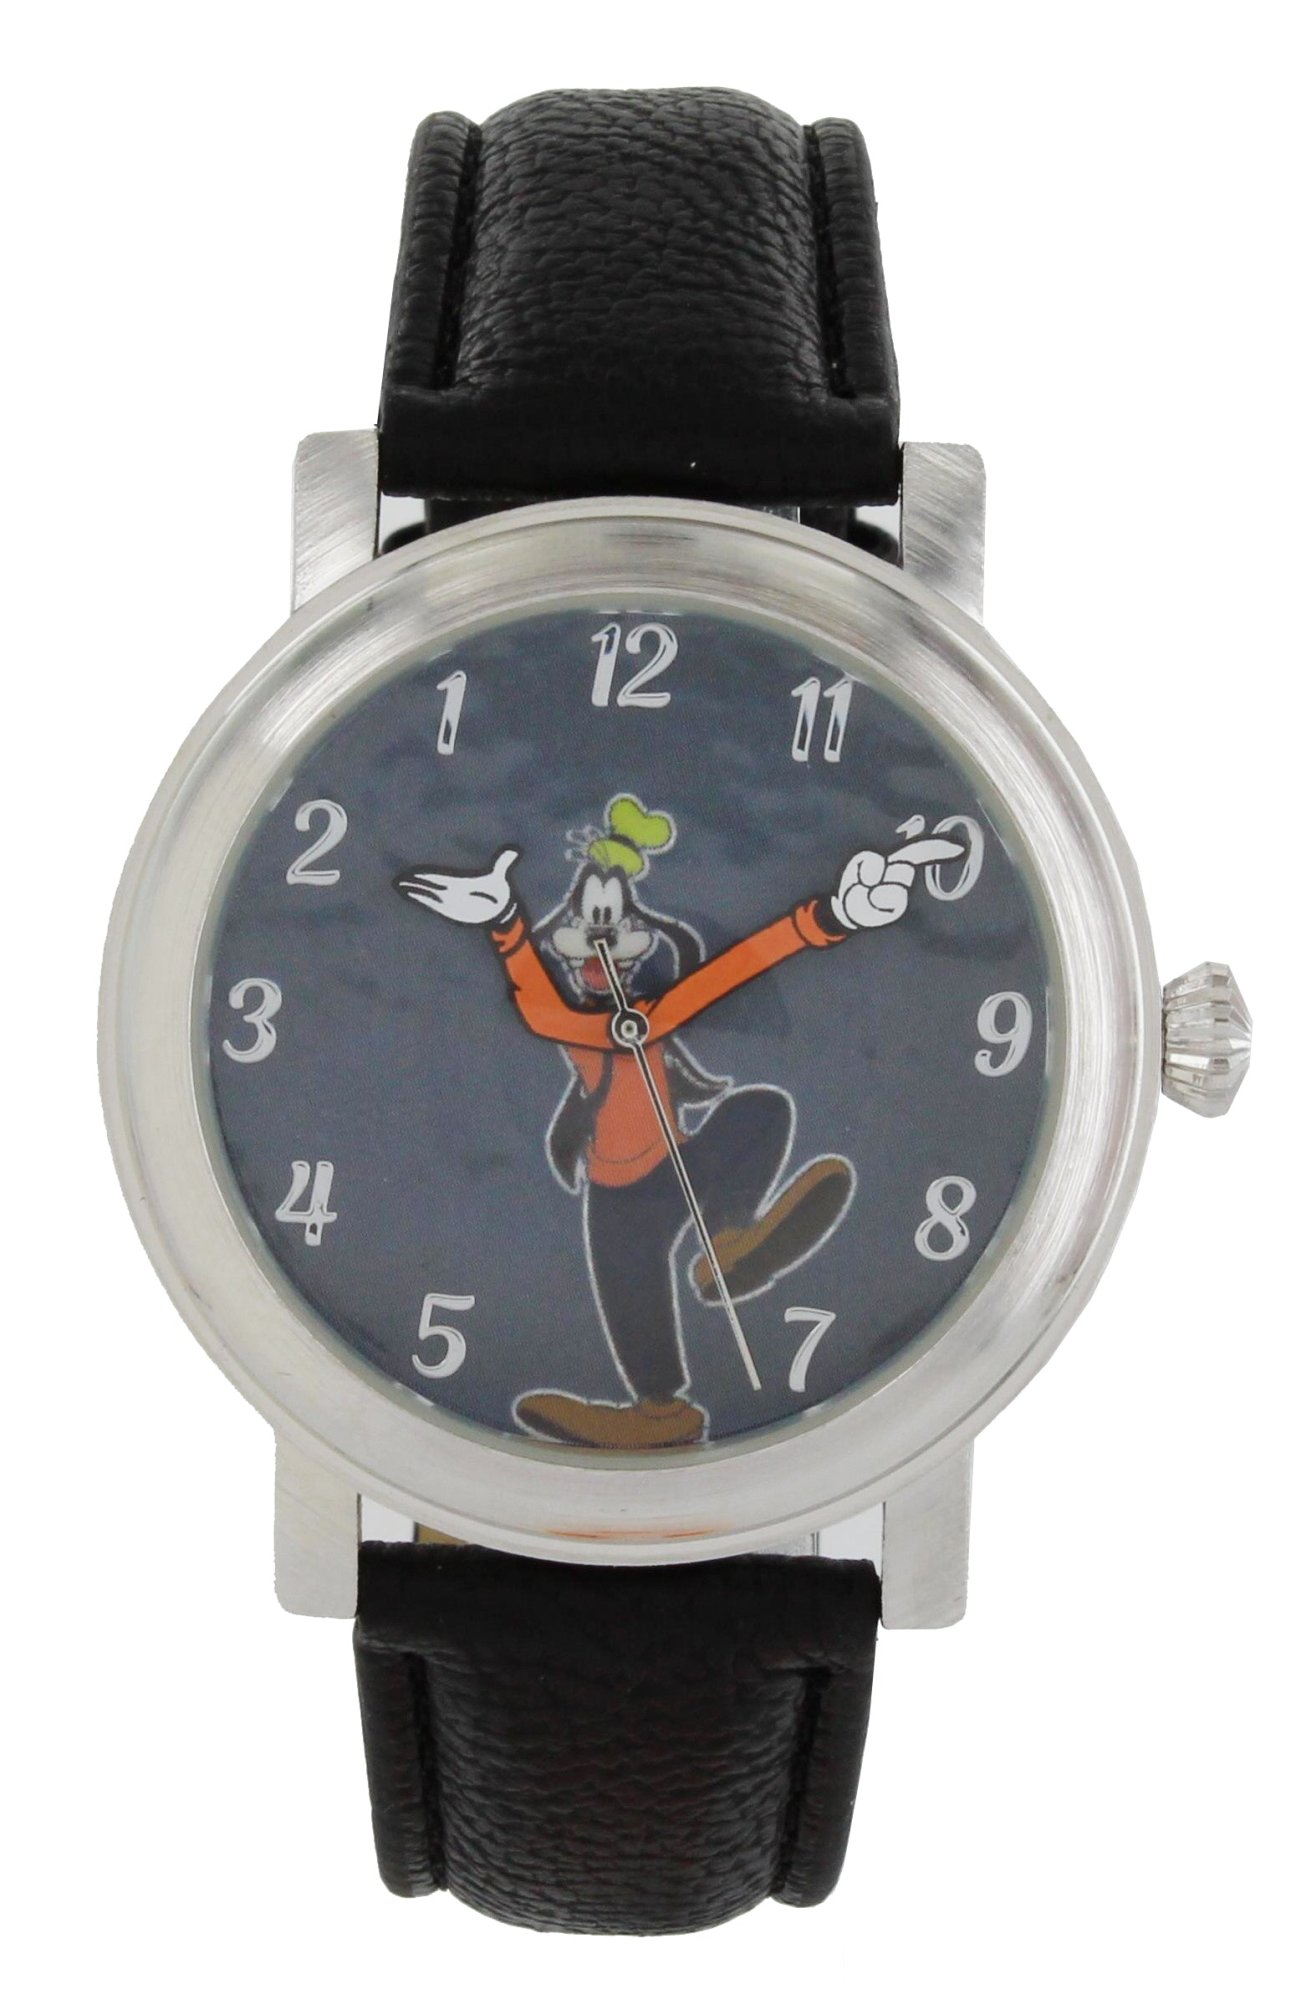 Model: Goofy Vintage Style Backward Ticking Molded Hand Watch